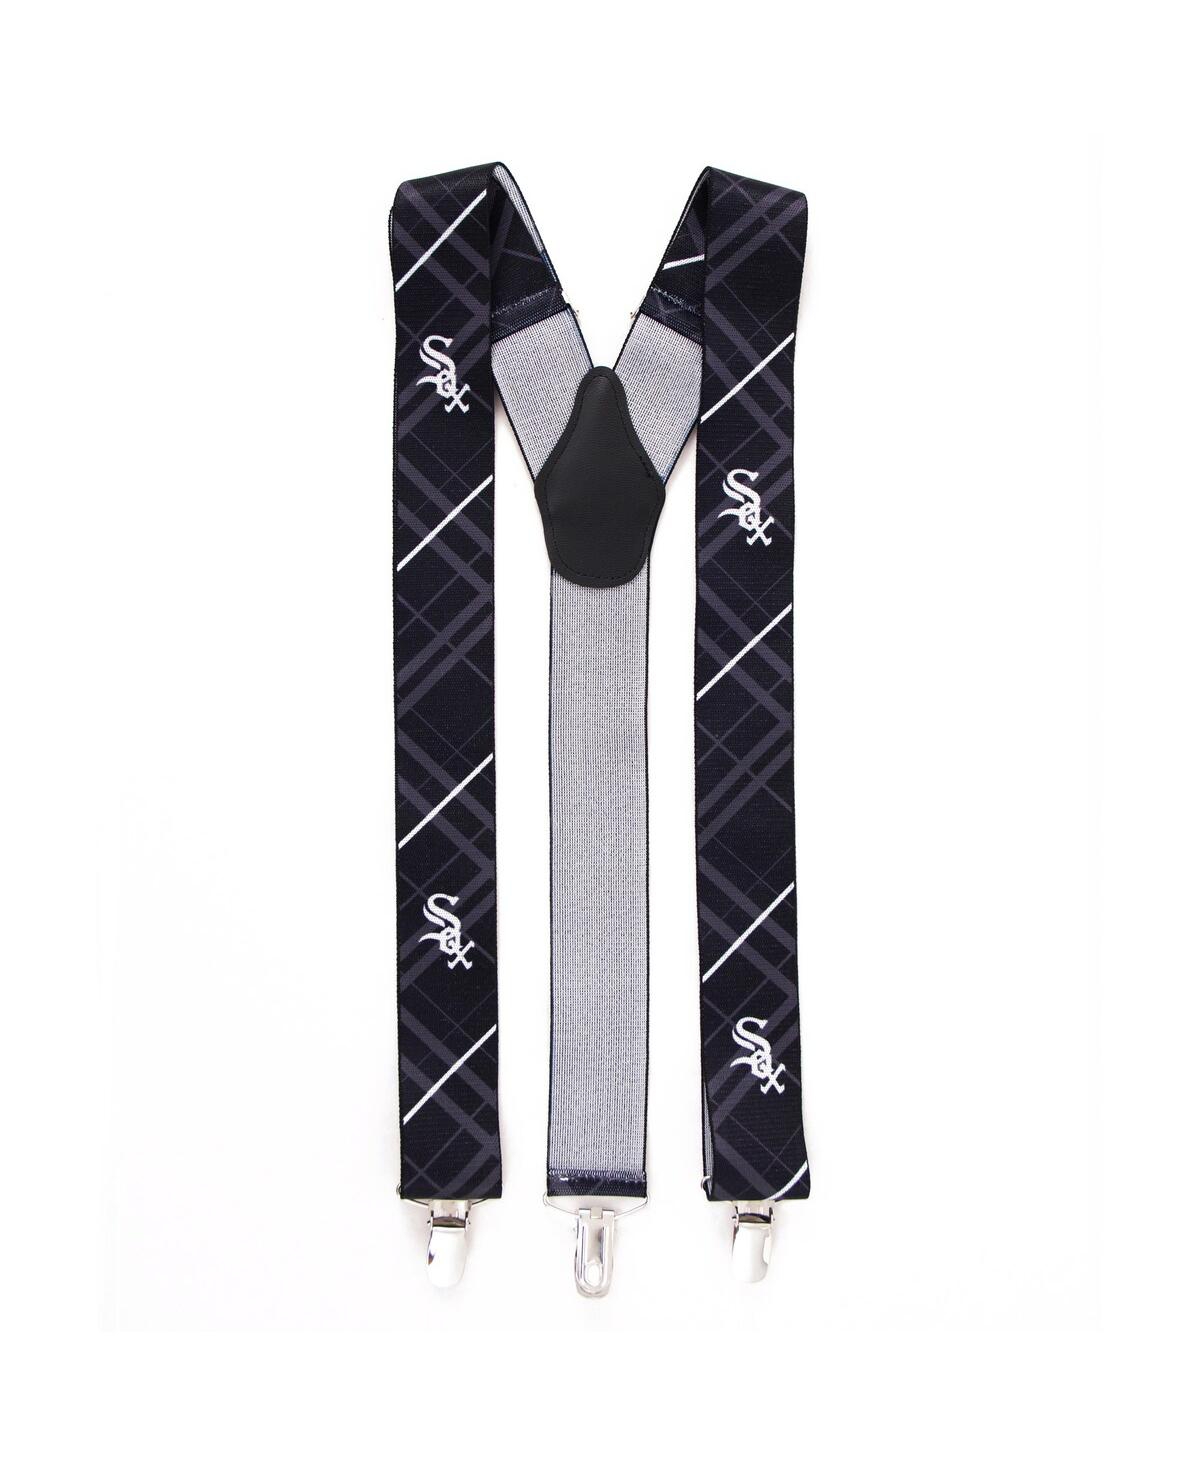 Men's Chicago White Sox Suspenders - Black